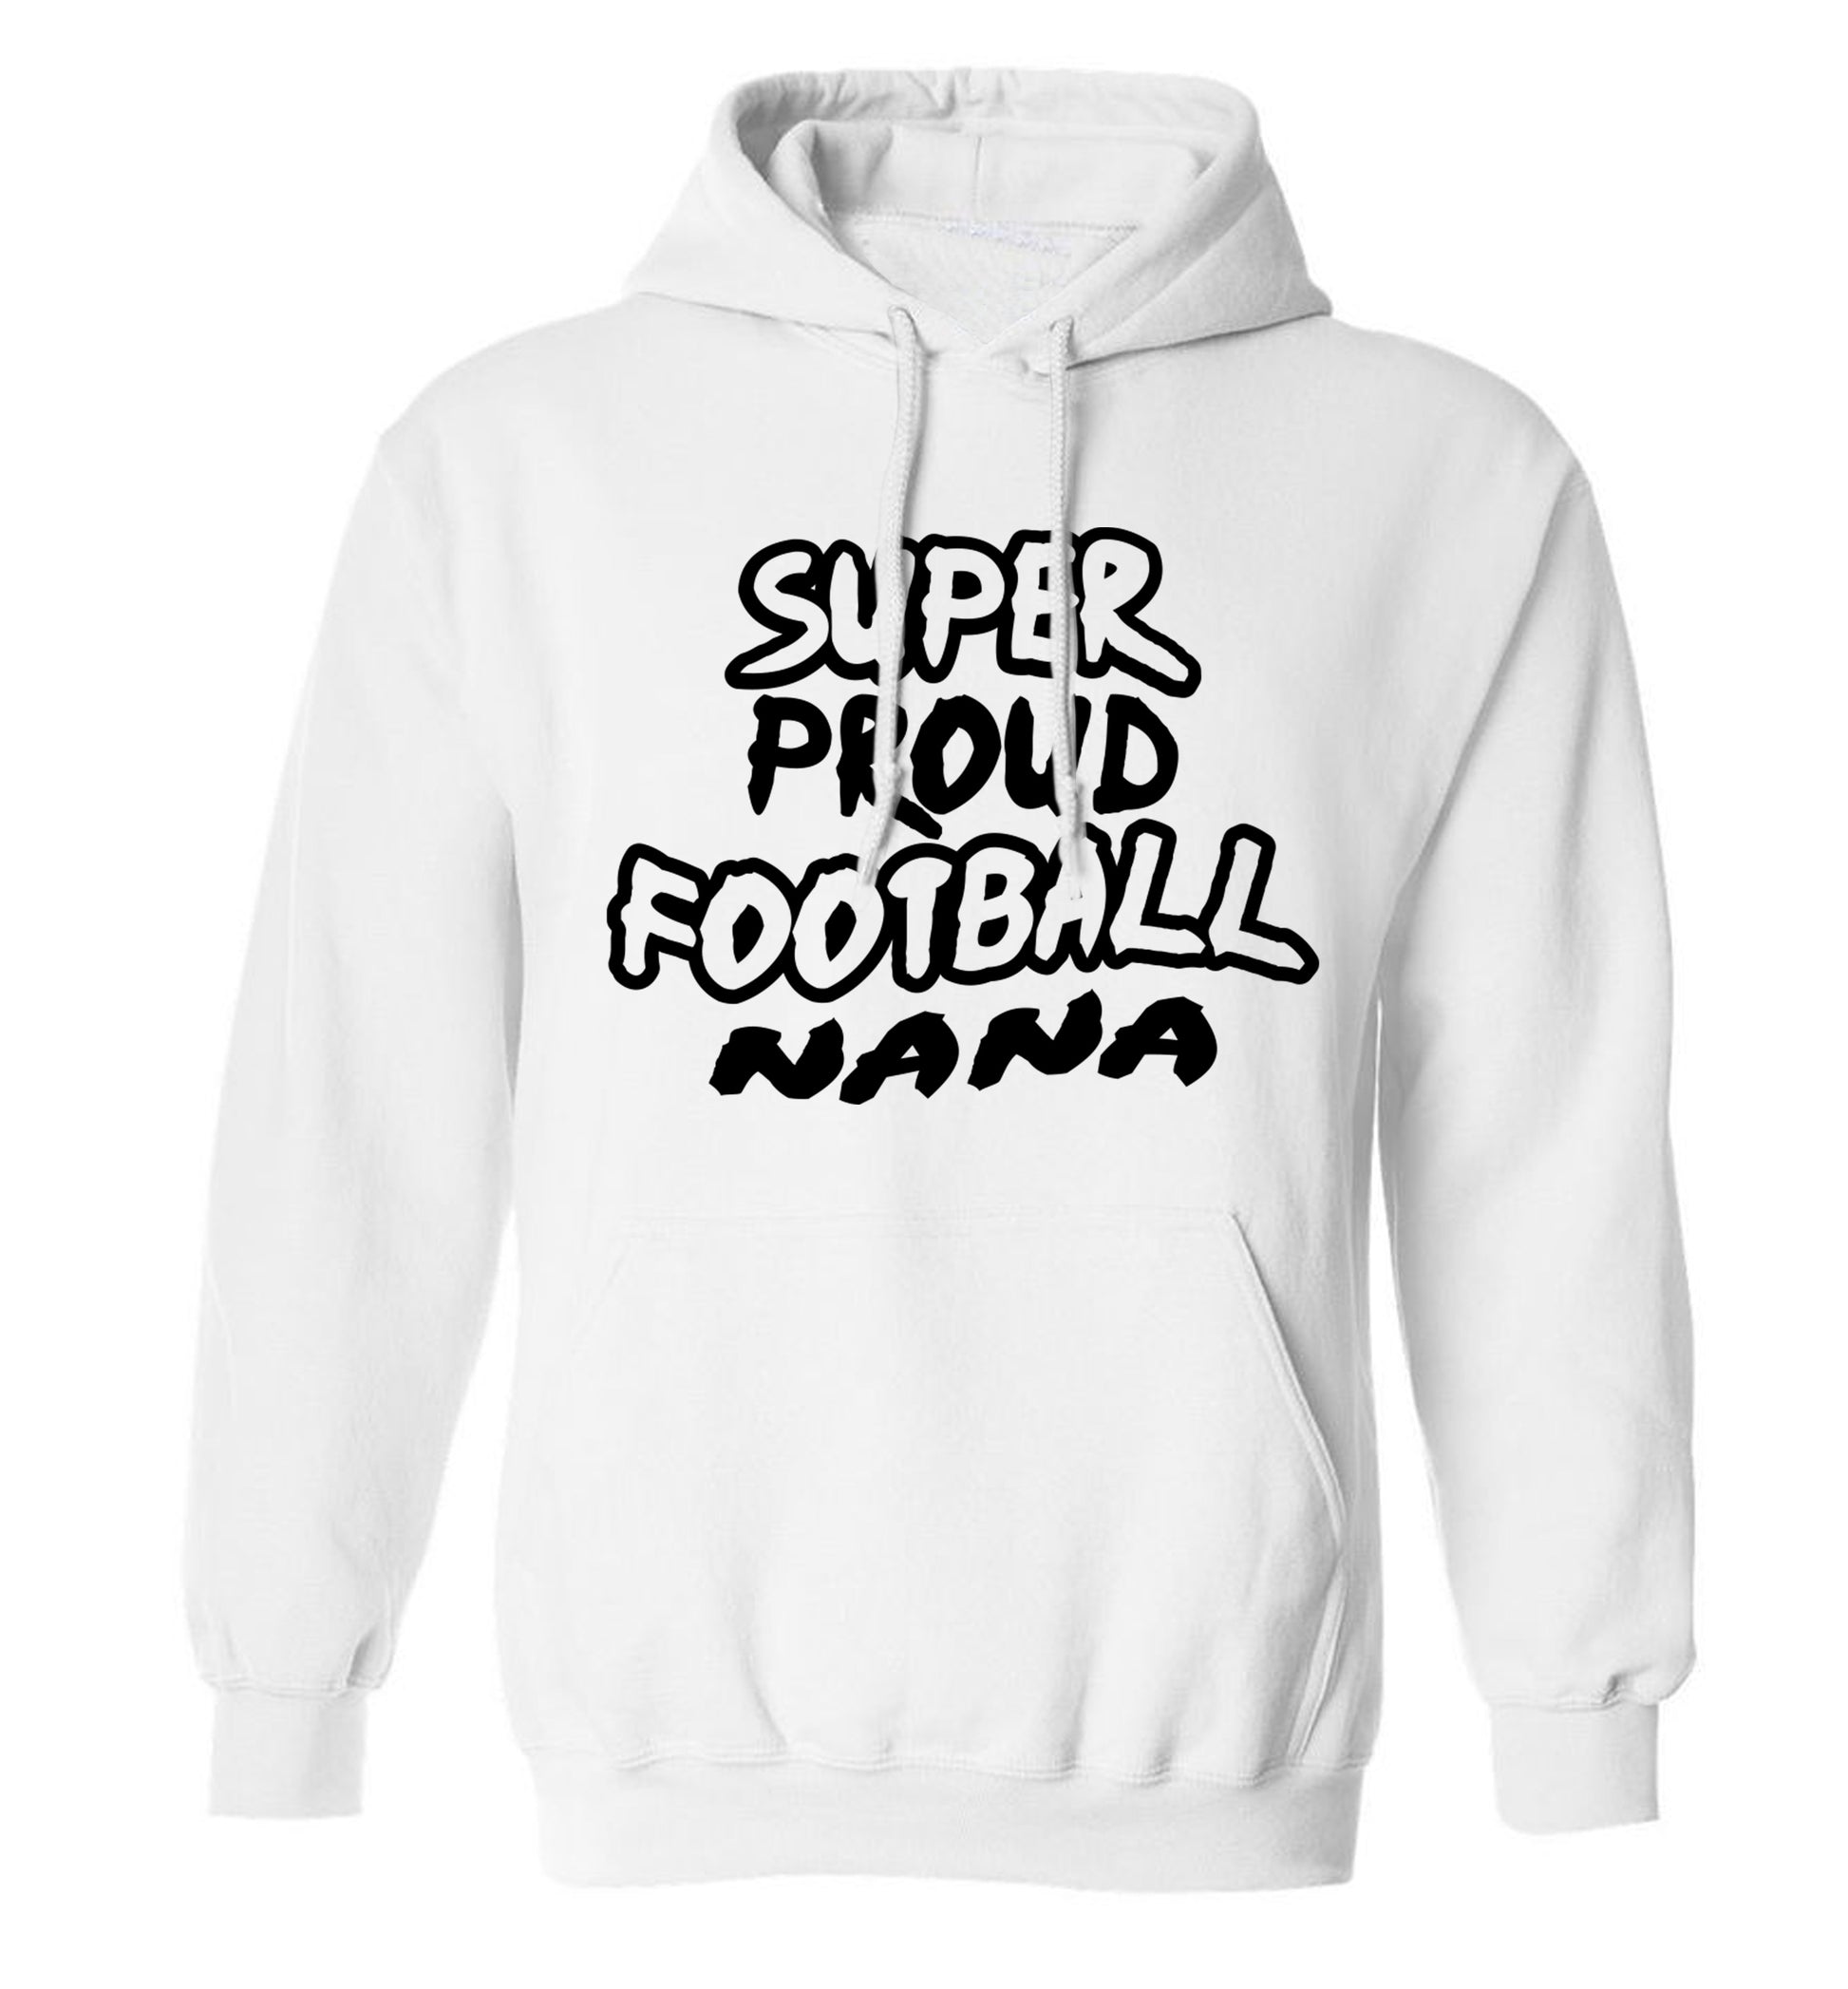 Super proud football nana adults unisexwhite hoodie 2XL